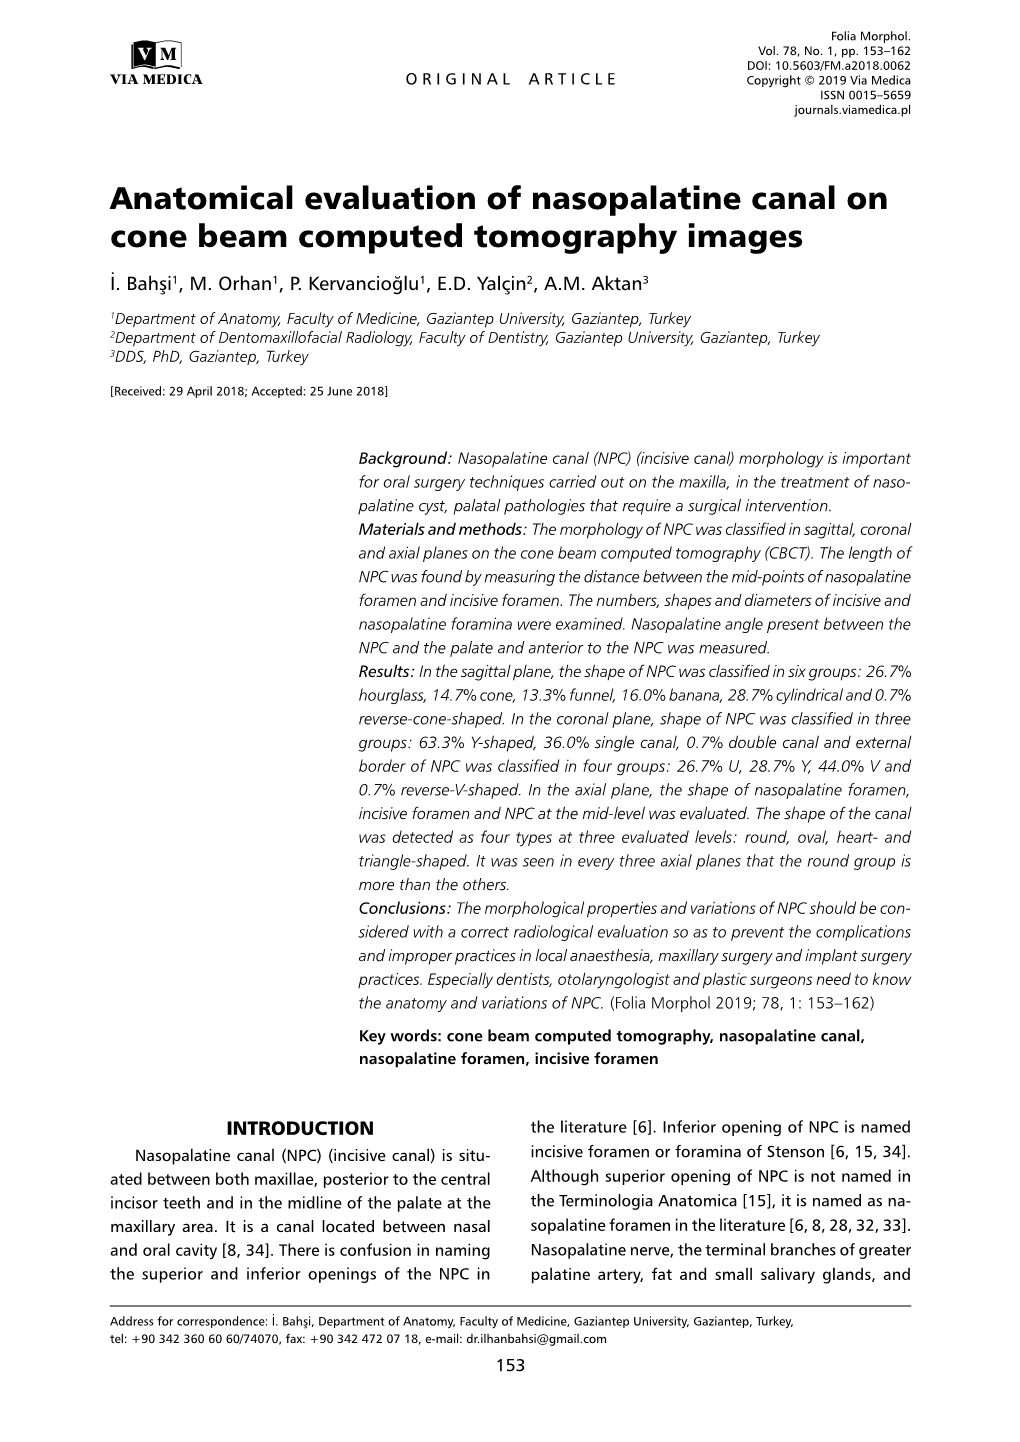 Anatomical Evaluation of Nasopalatine Canal on Cone Beam Computed Tomography Images İ